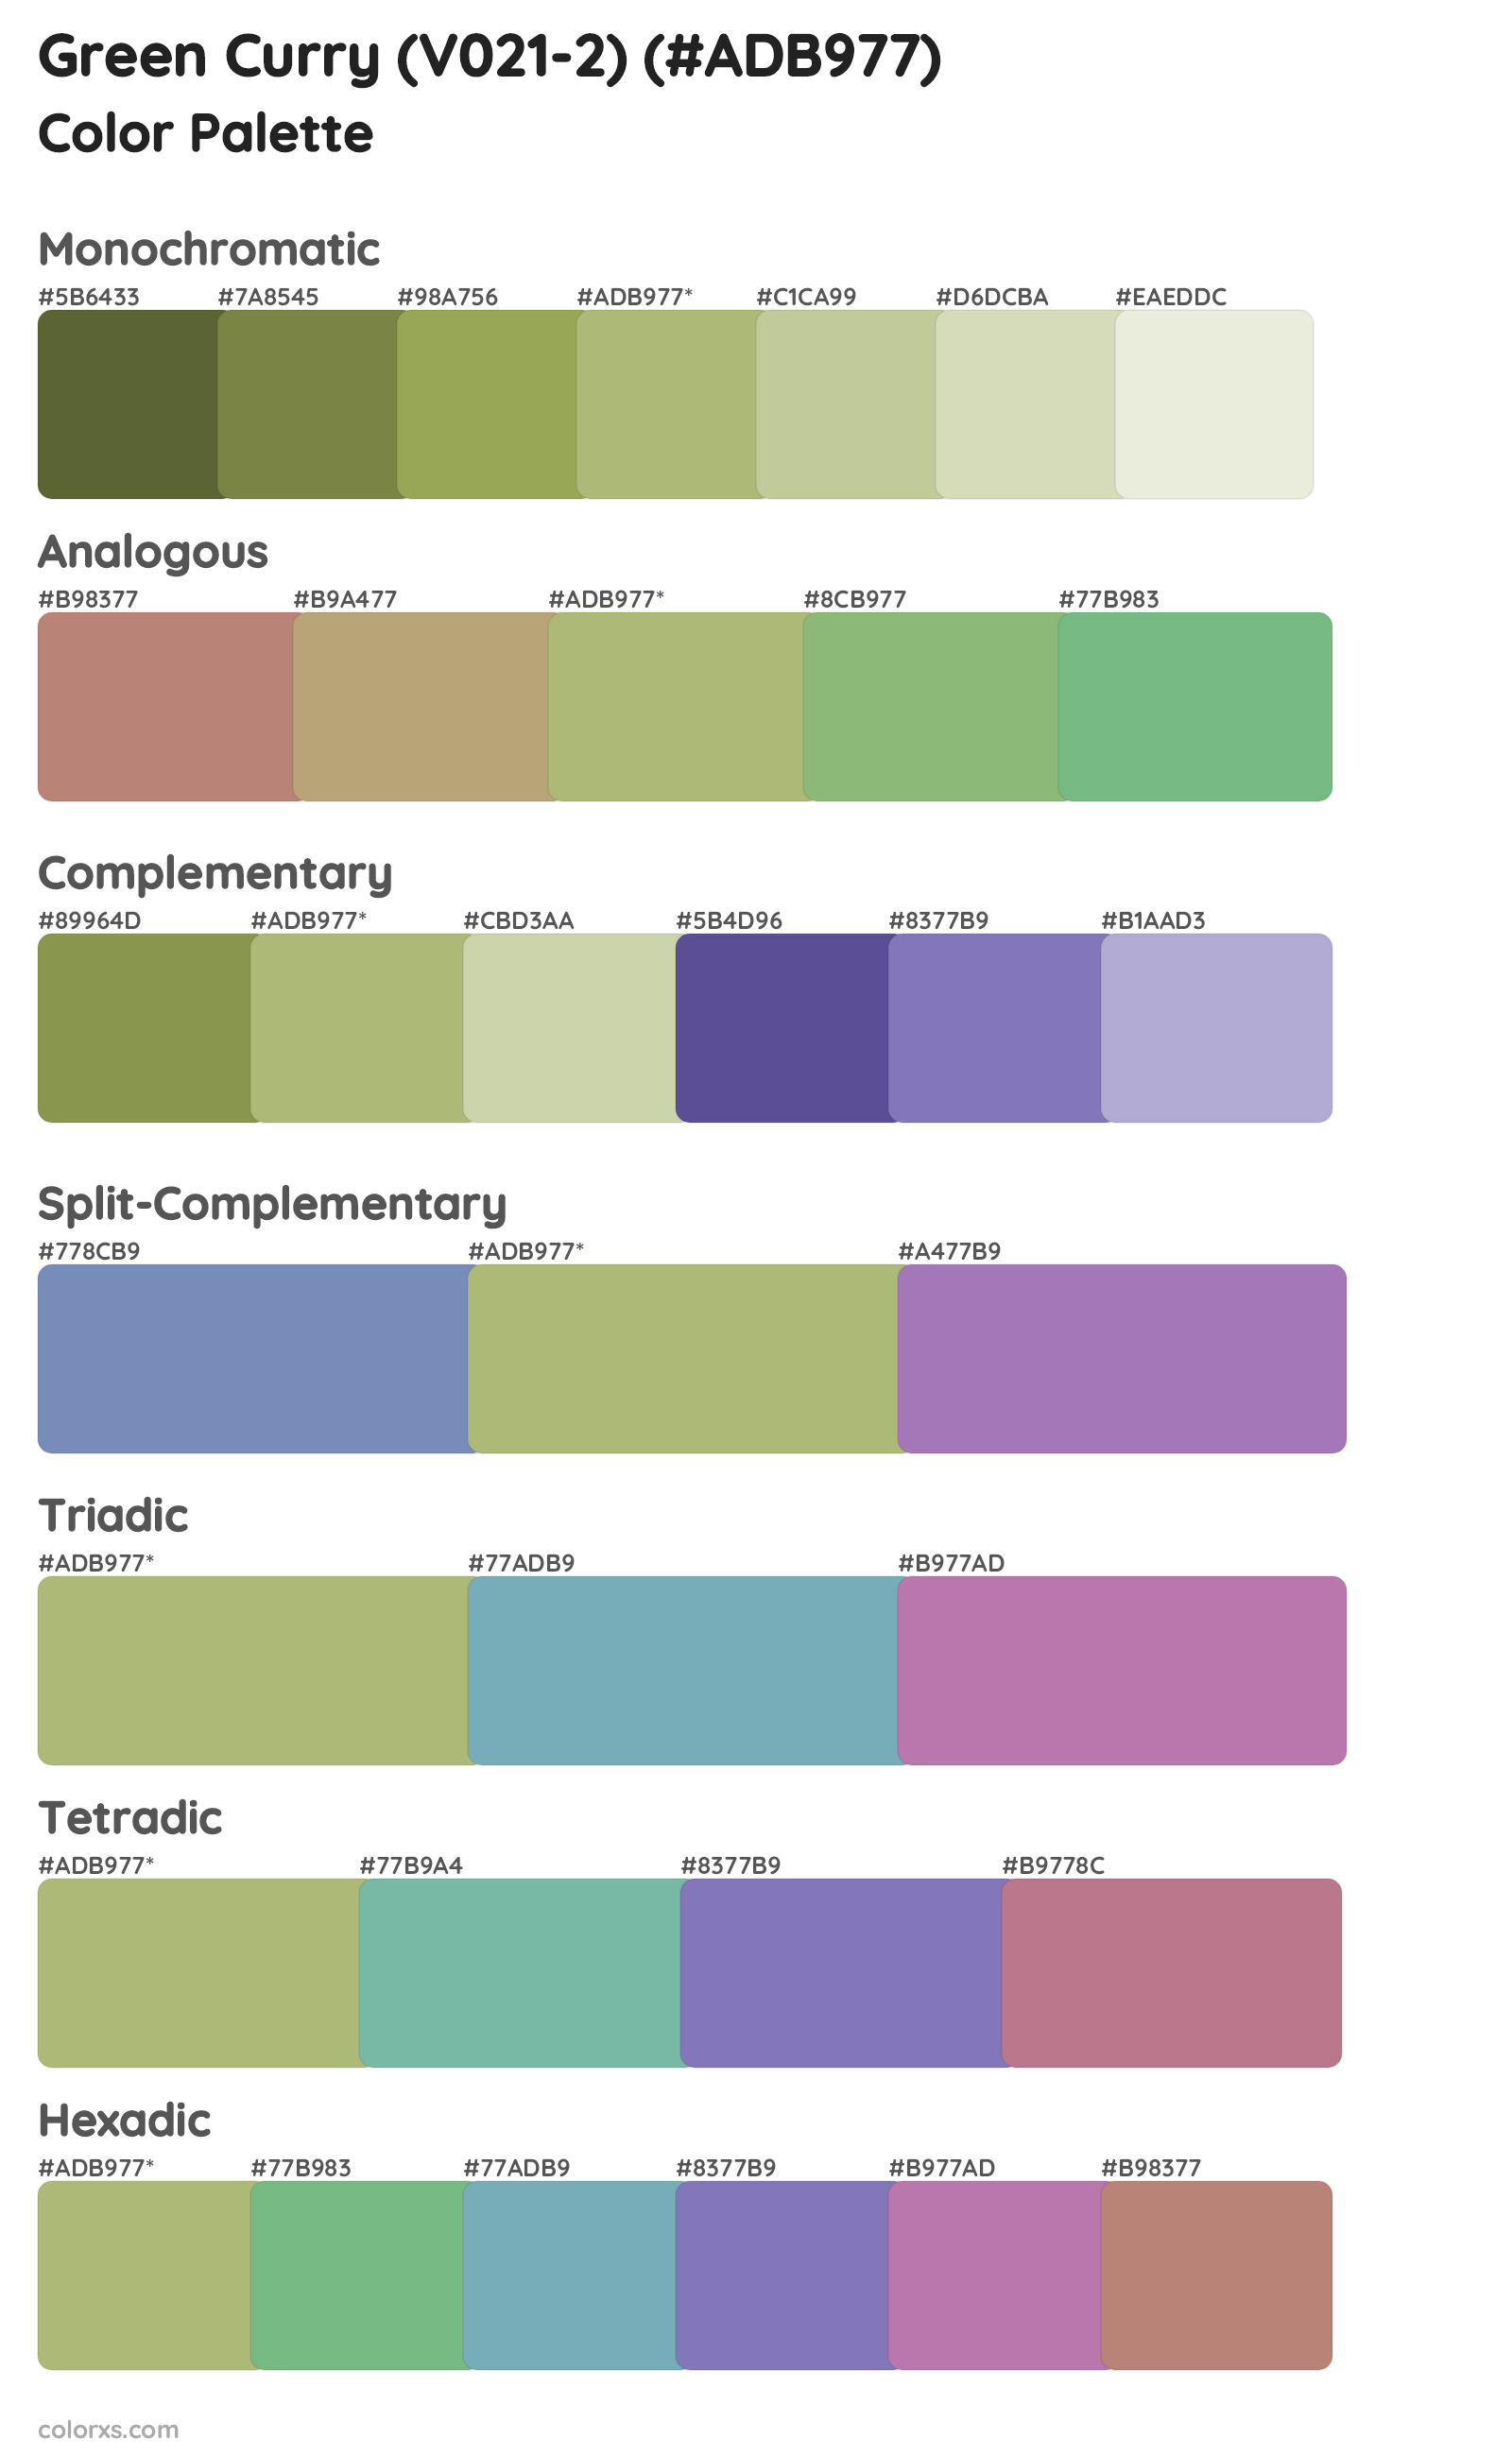 Green Curry (V021-2) Color Scheme Palettes